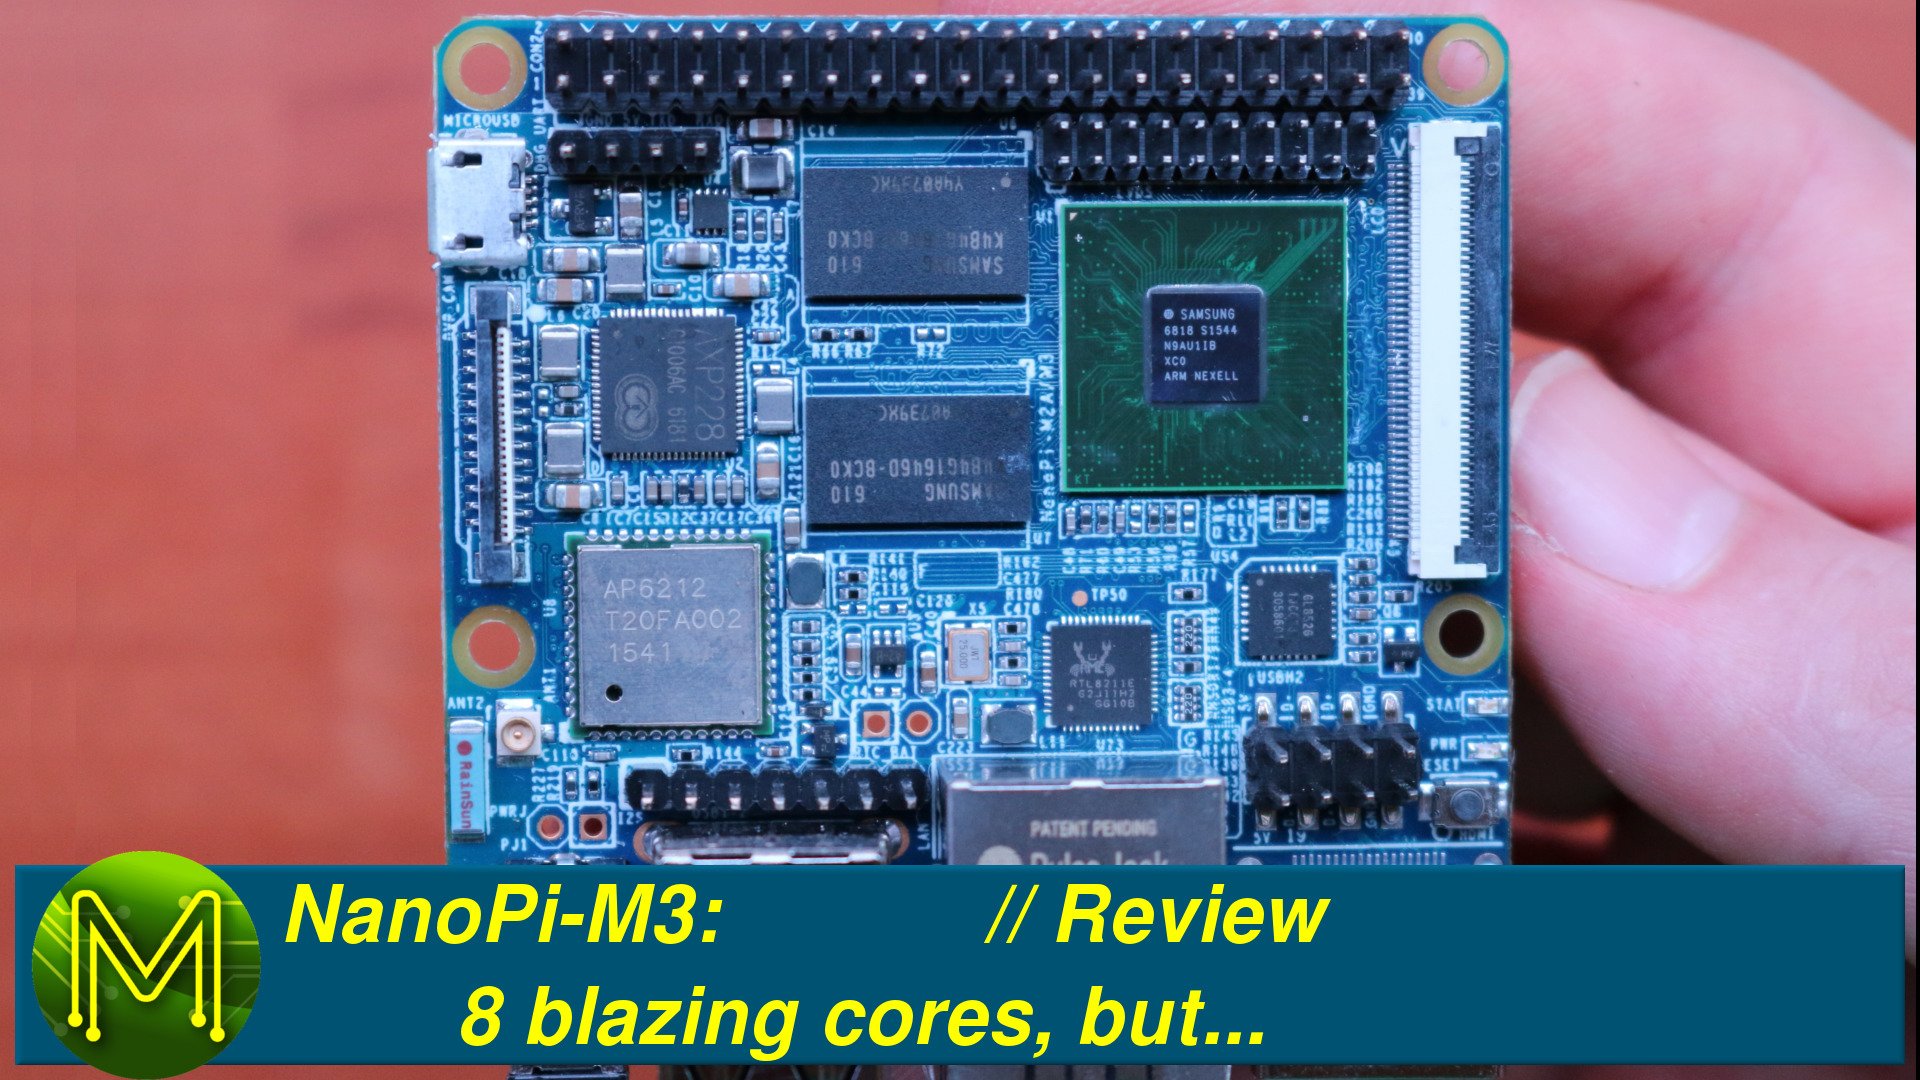 NanoPi-M3: 8 blazing cores, but... // Review